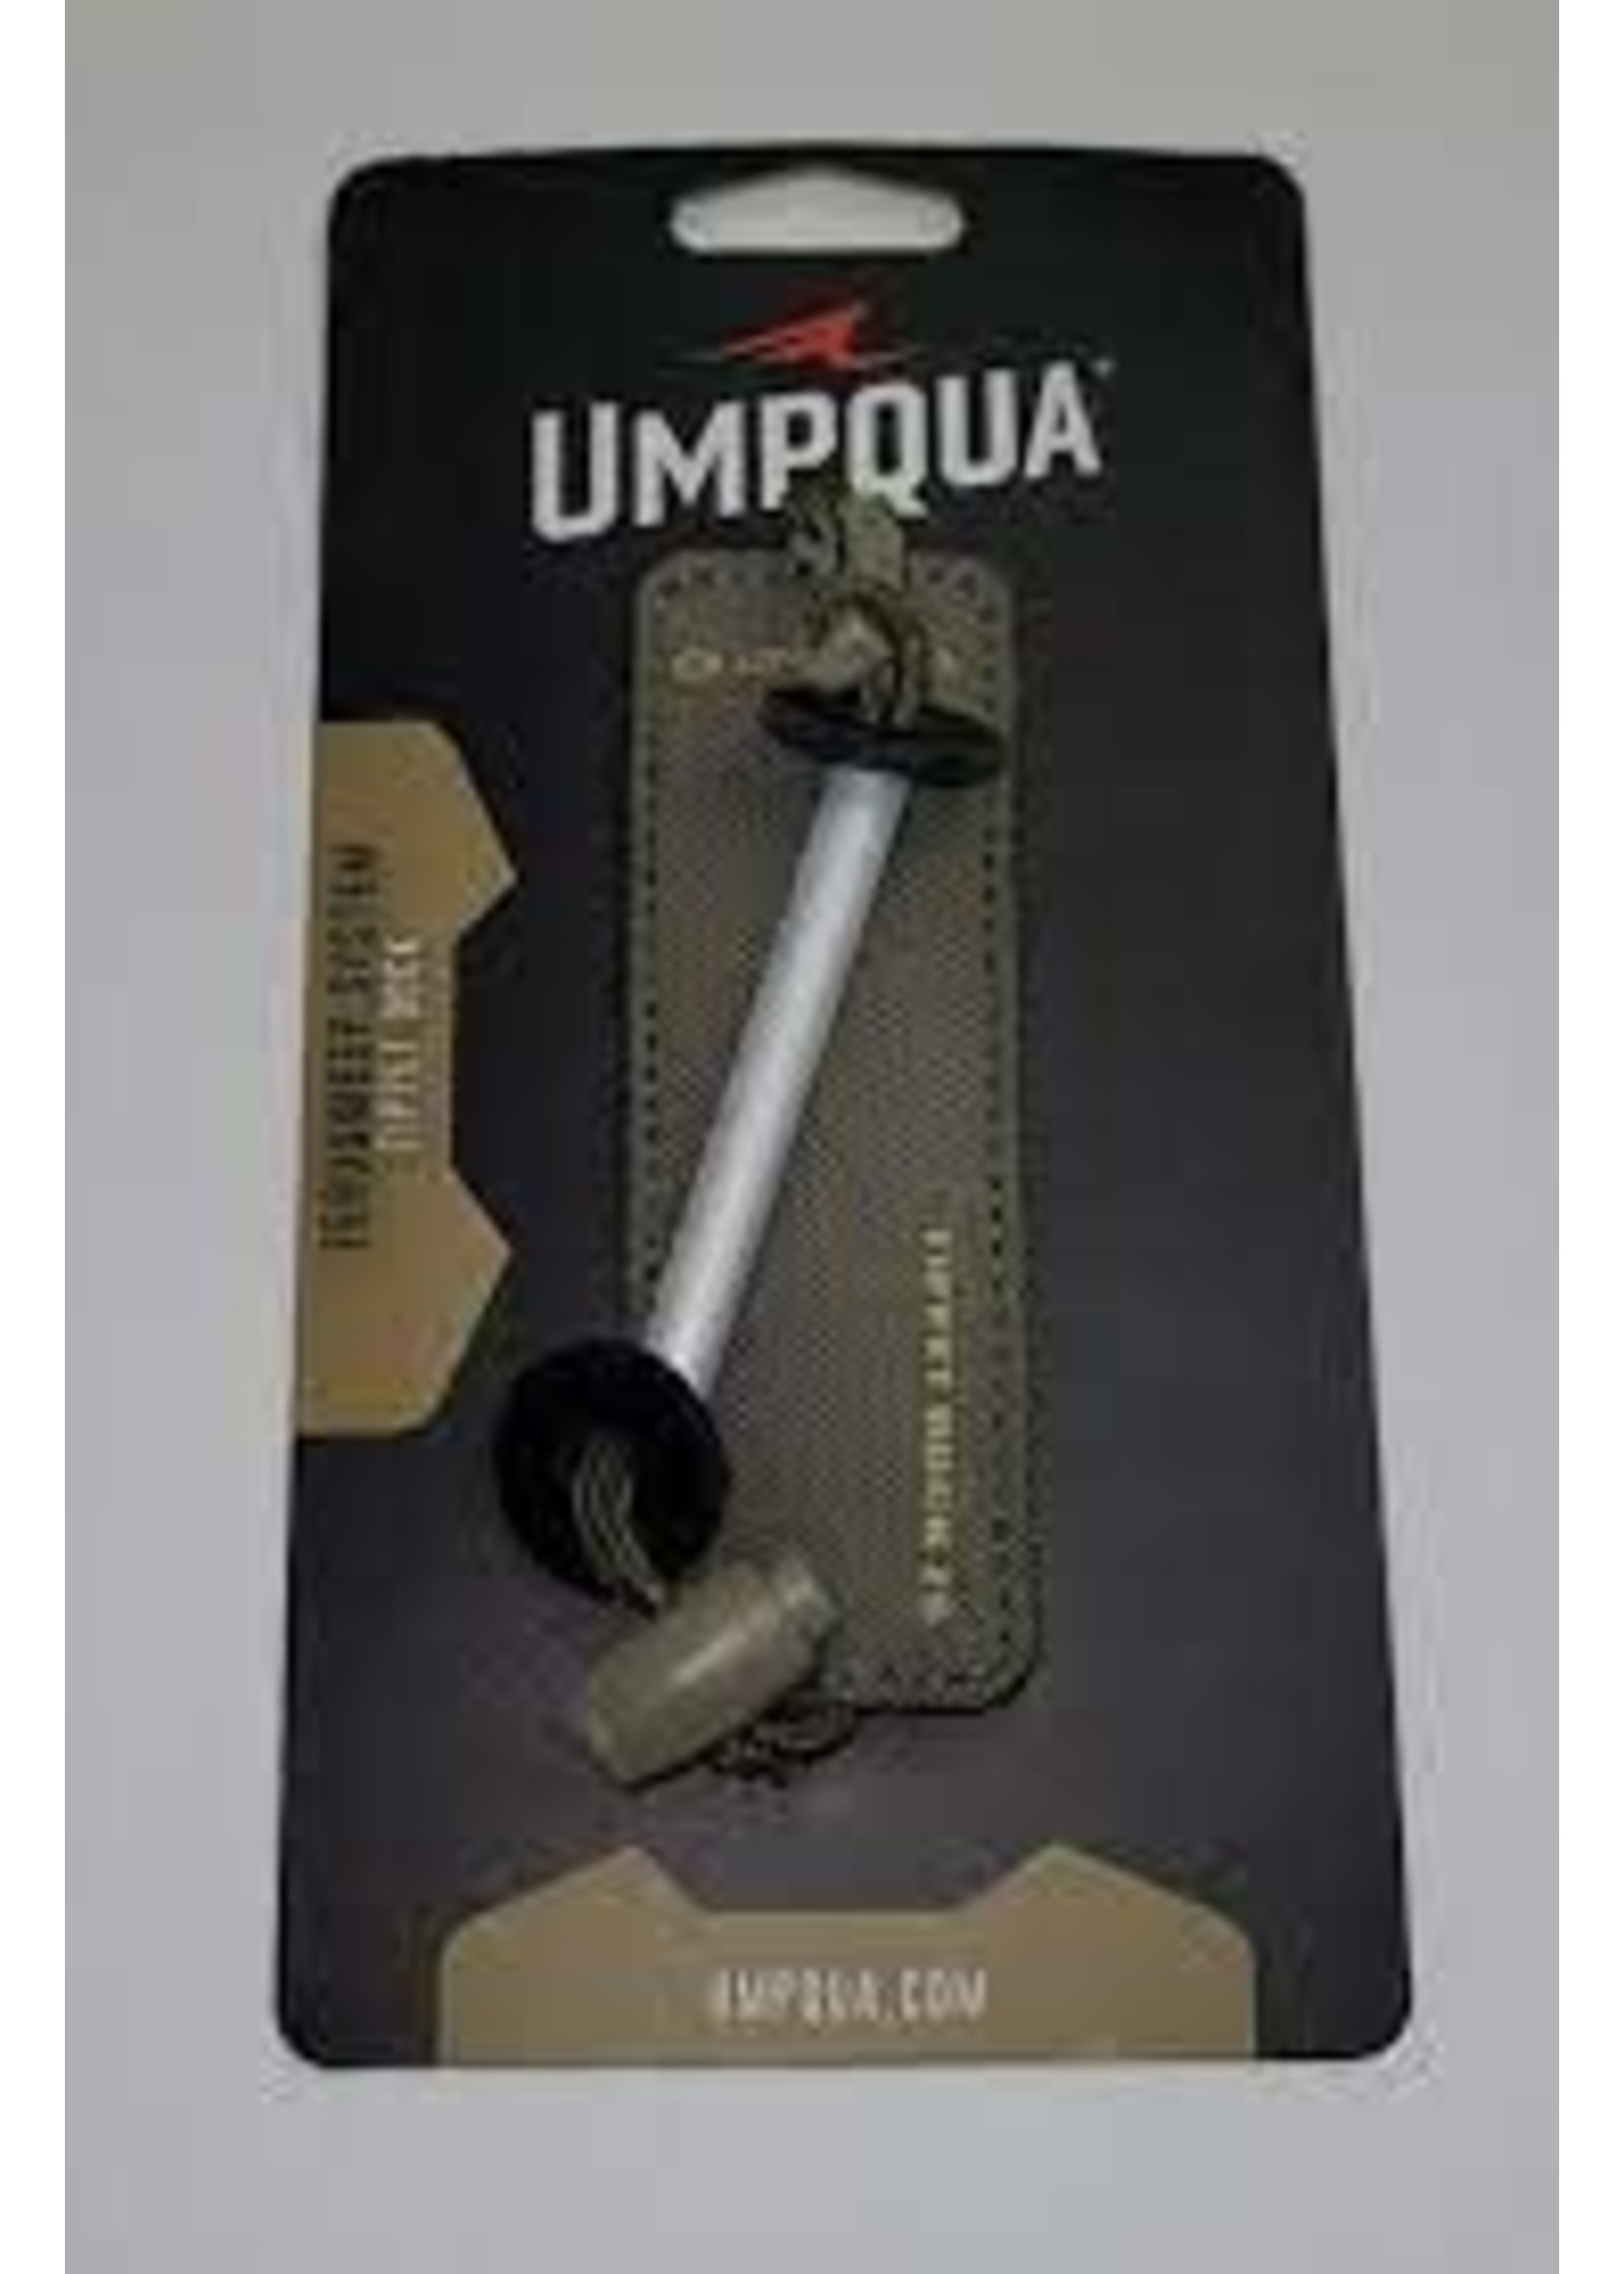 Umpqua Umpqua Zerosweep System Tippet Dock